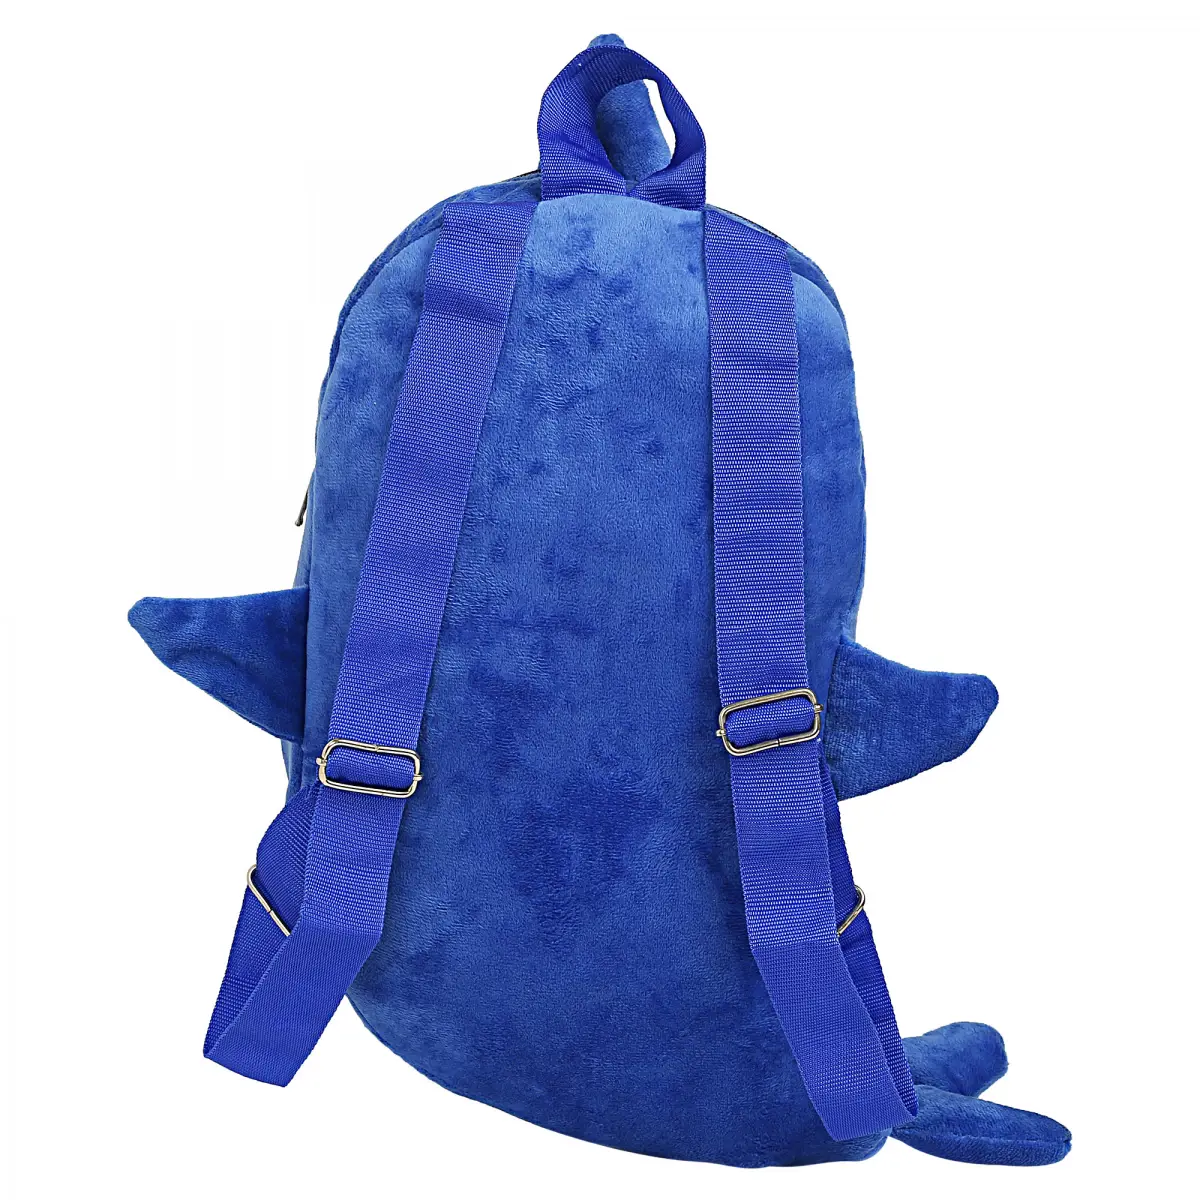 Fuzzbuzz Baby Shark Bag, 3Y+, Blue